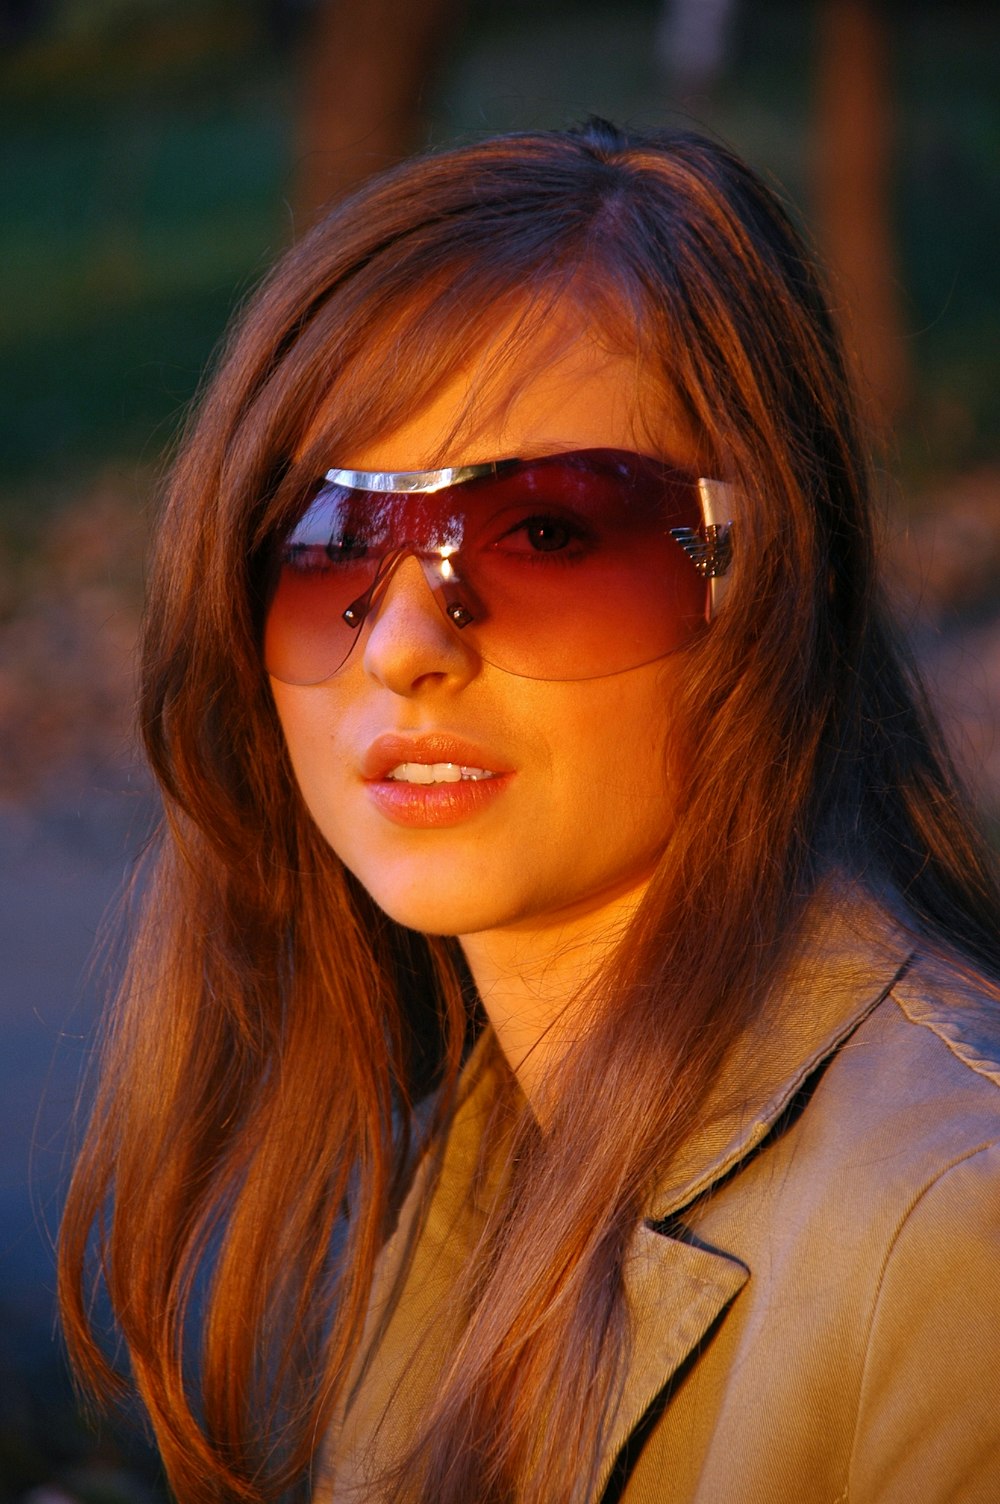 woman wearing brown sunglasses